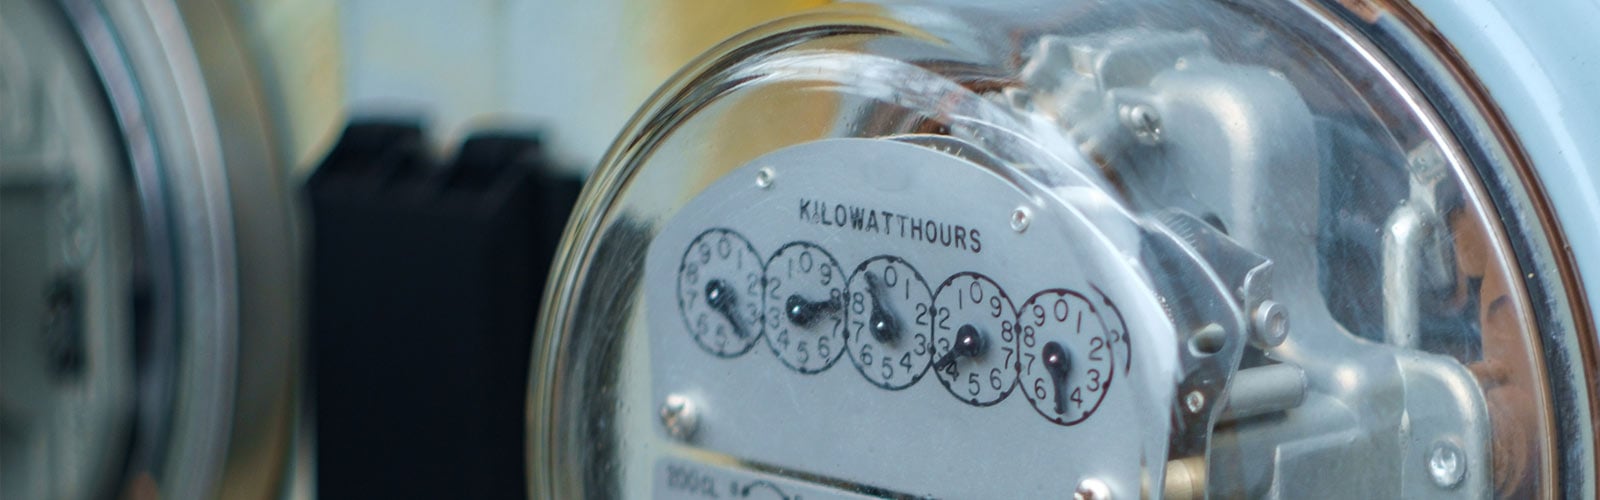 Electric meter measuring kilowatt hours. 